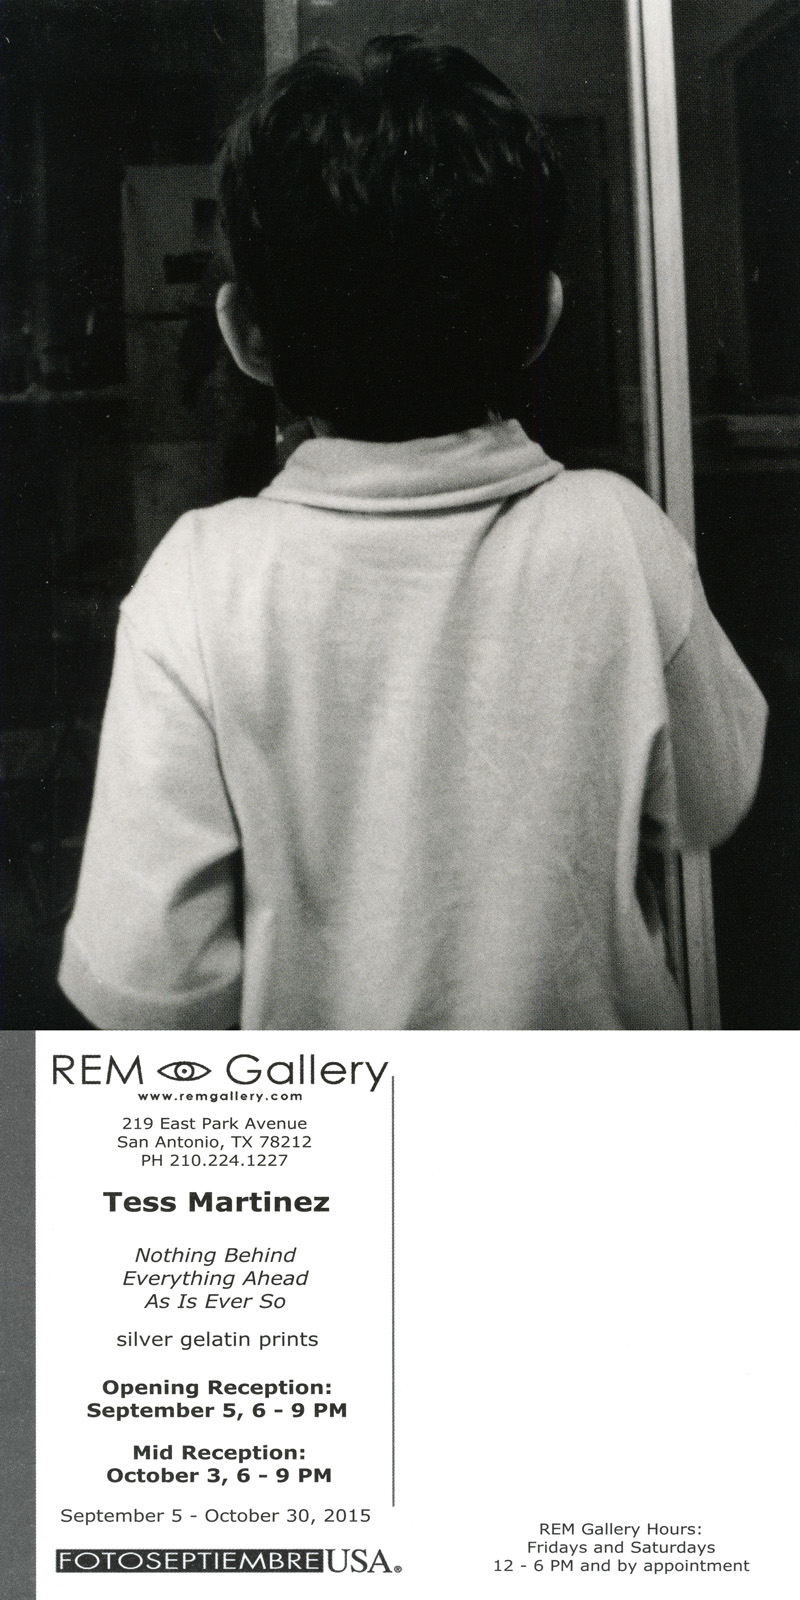 2015-FOTOSEPTIEMBRE-USA_REM-Gallery_Promo-Card